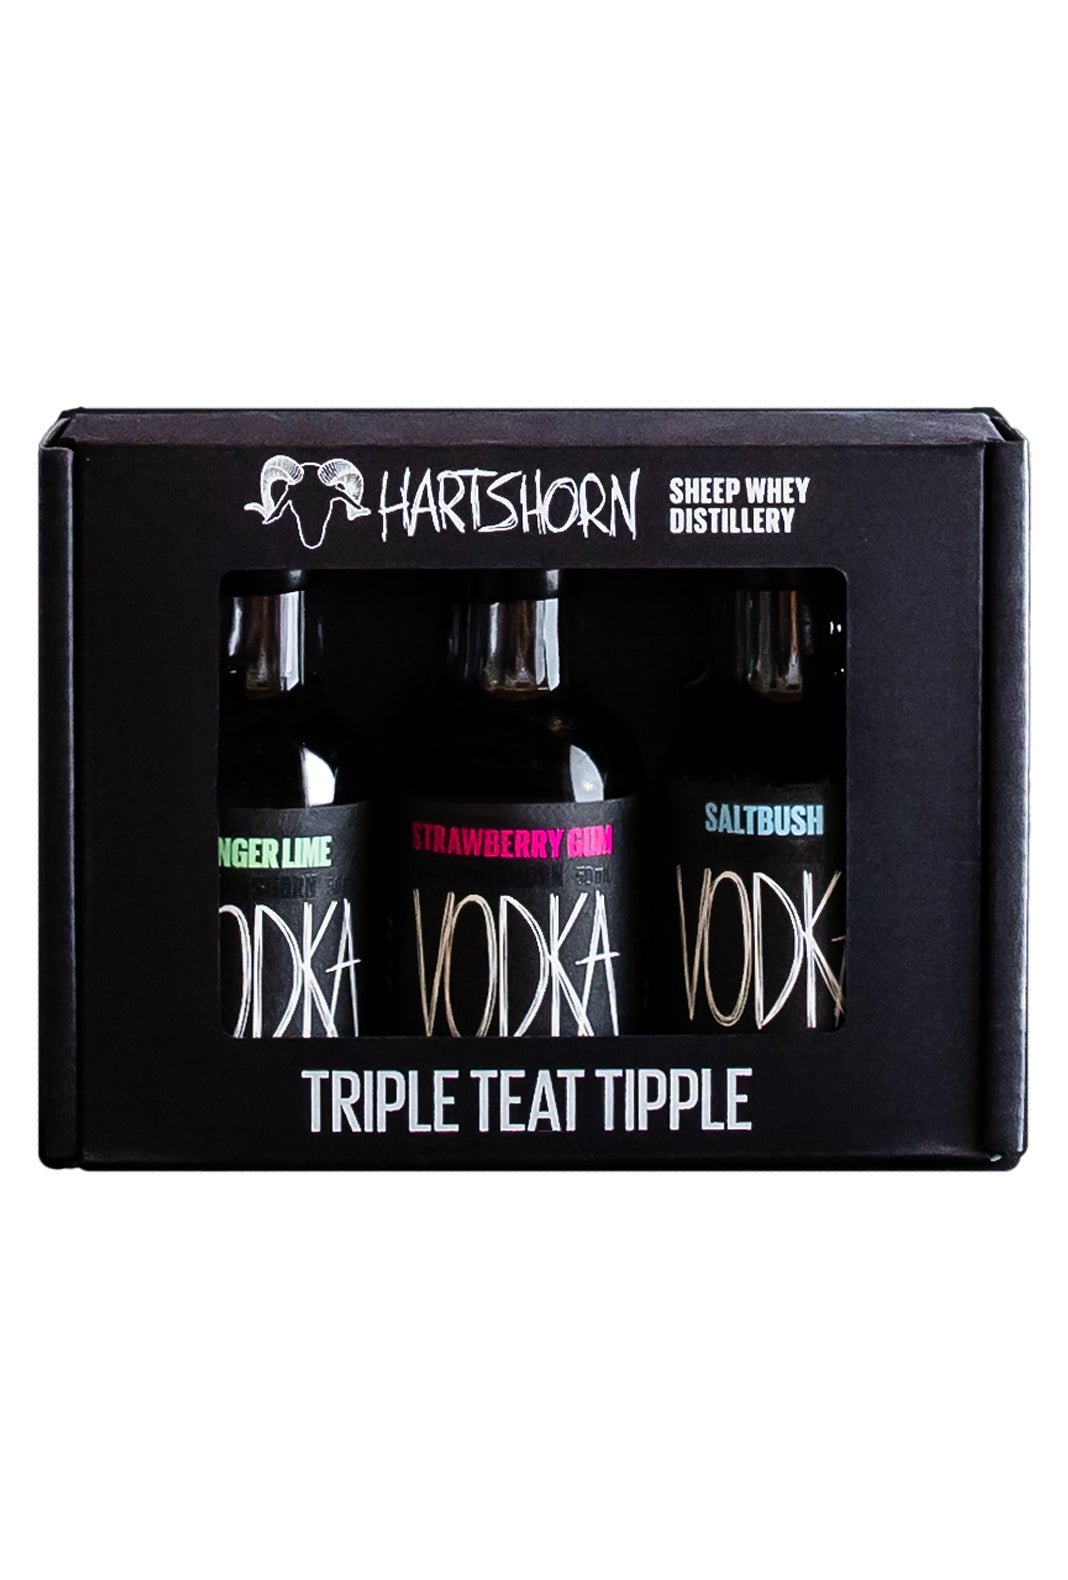 Hartshorn Trio Finger Lime, Saltbush, Strawberry Gum Vodka Gift Pack 3 x 50ml | Vodka | Shop online at Spirits of France